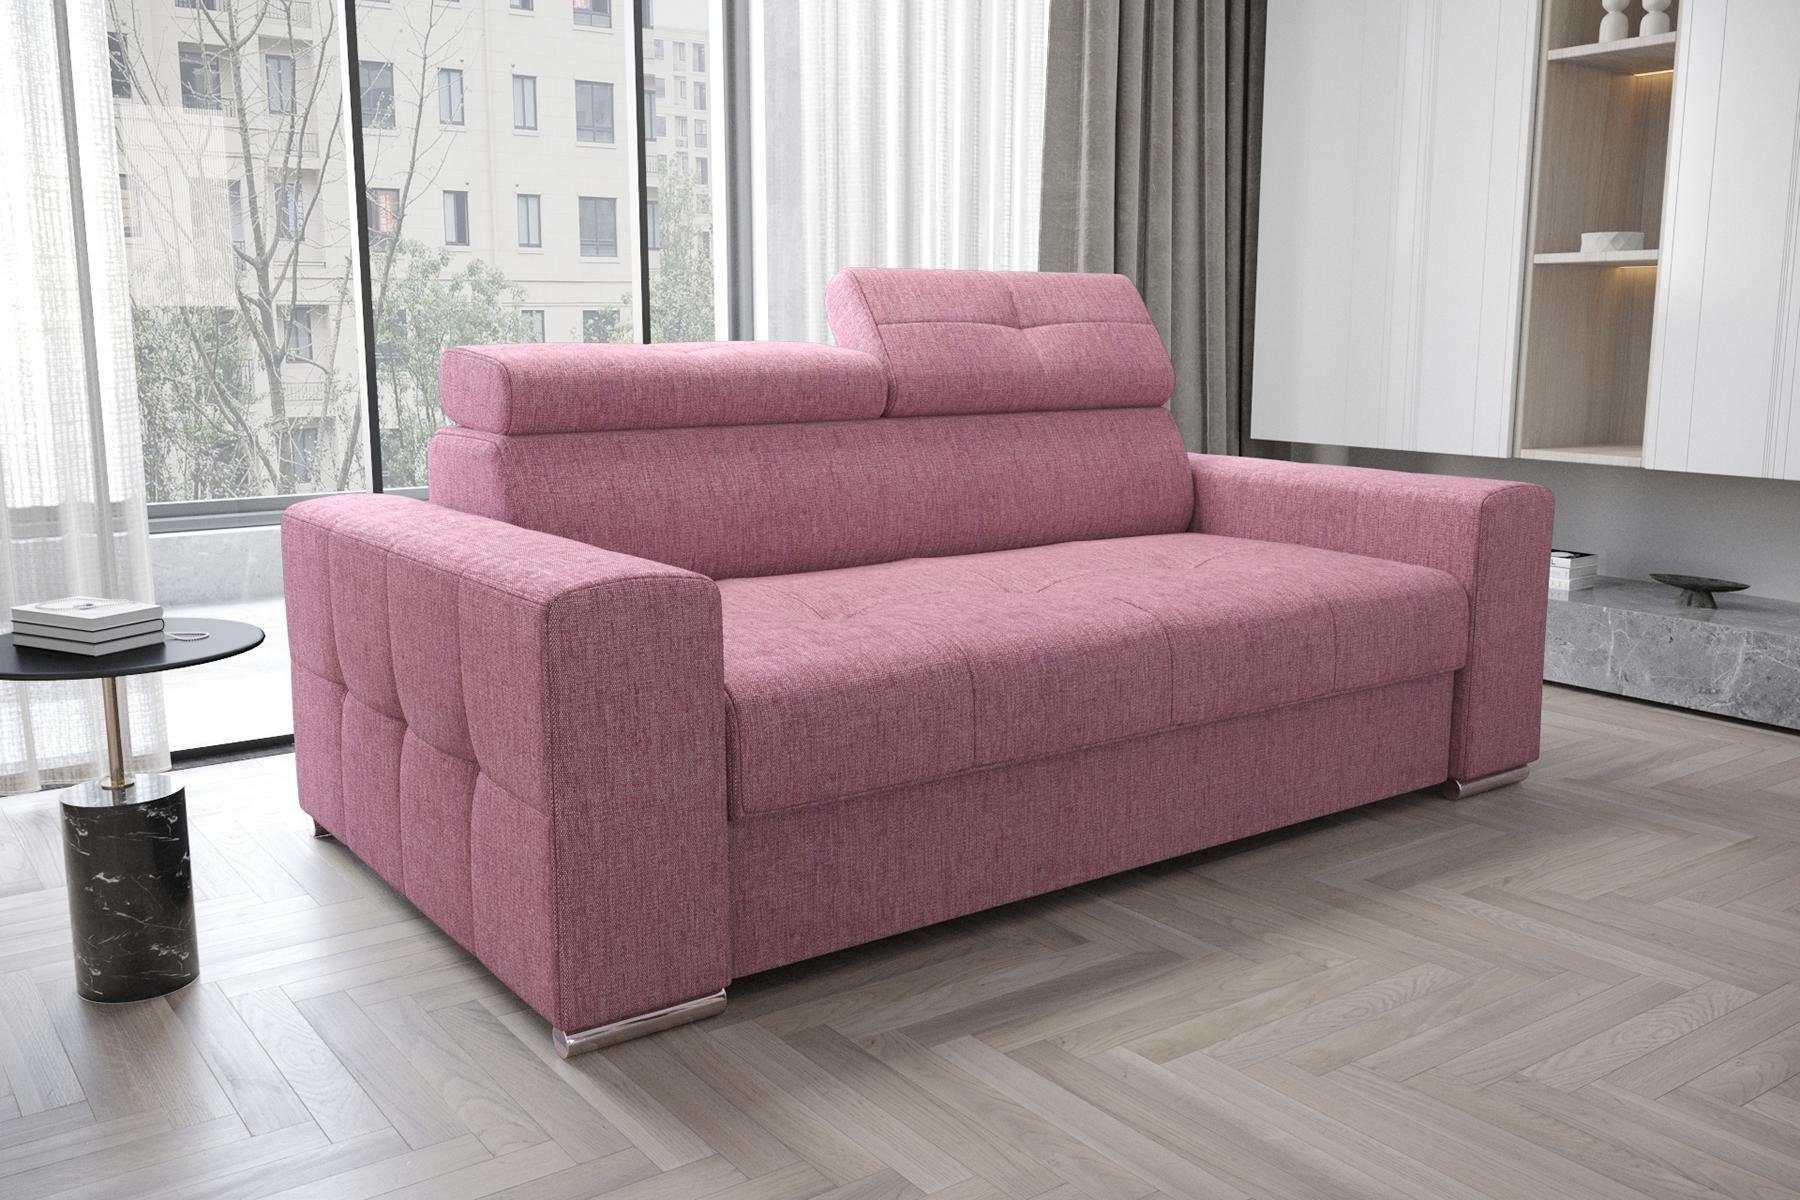 JVmoebel Sofa Designer Zweisitzer Couch Polster Textil Leder Sofa Design 2 Sitzer, Made in Europe Rosa | Rosa | Rosa